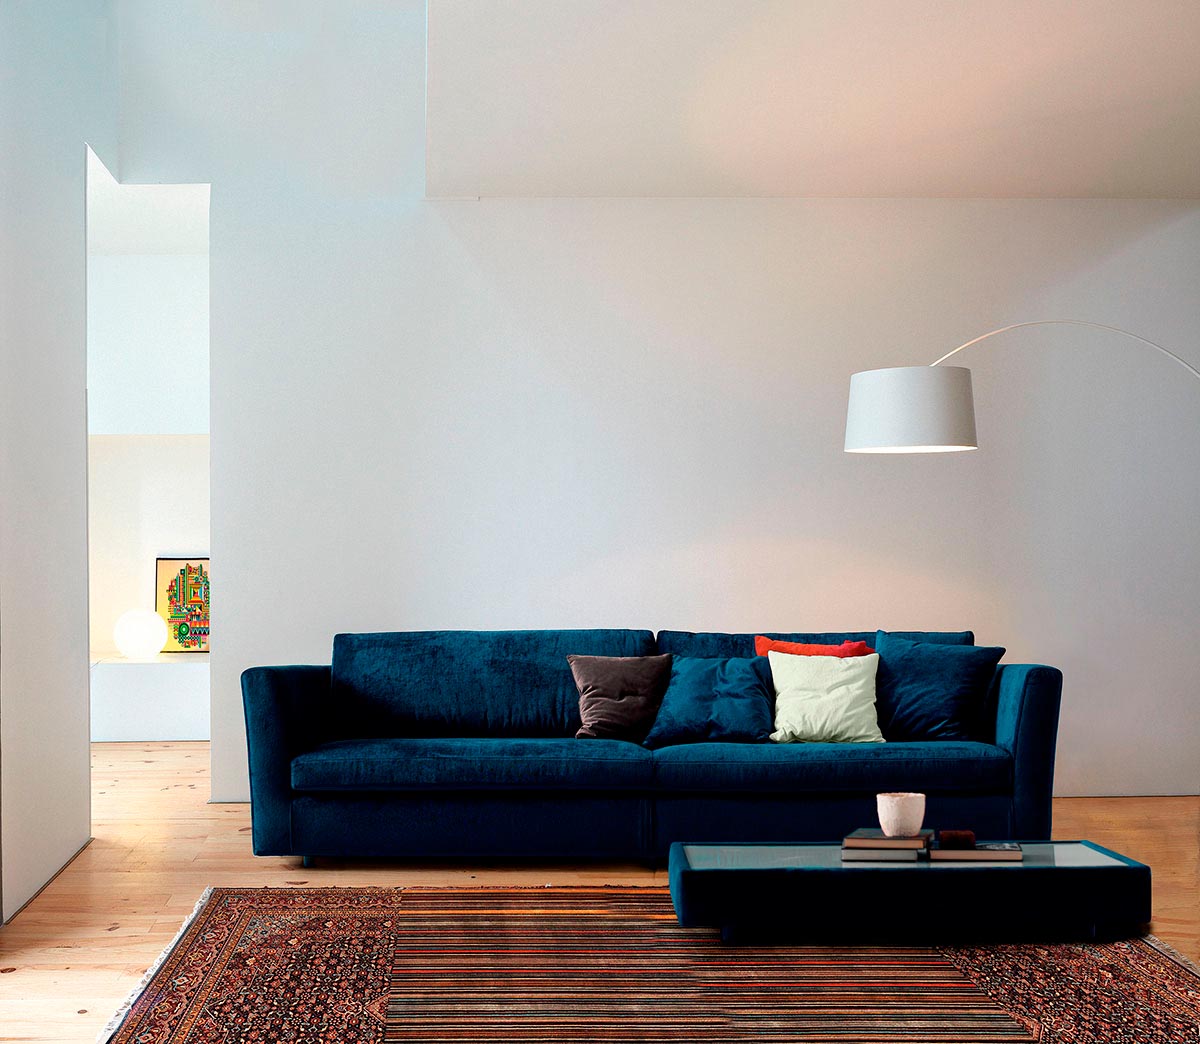 Air Sofa-Sancal-Contract Furniture Store